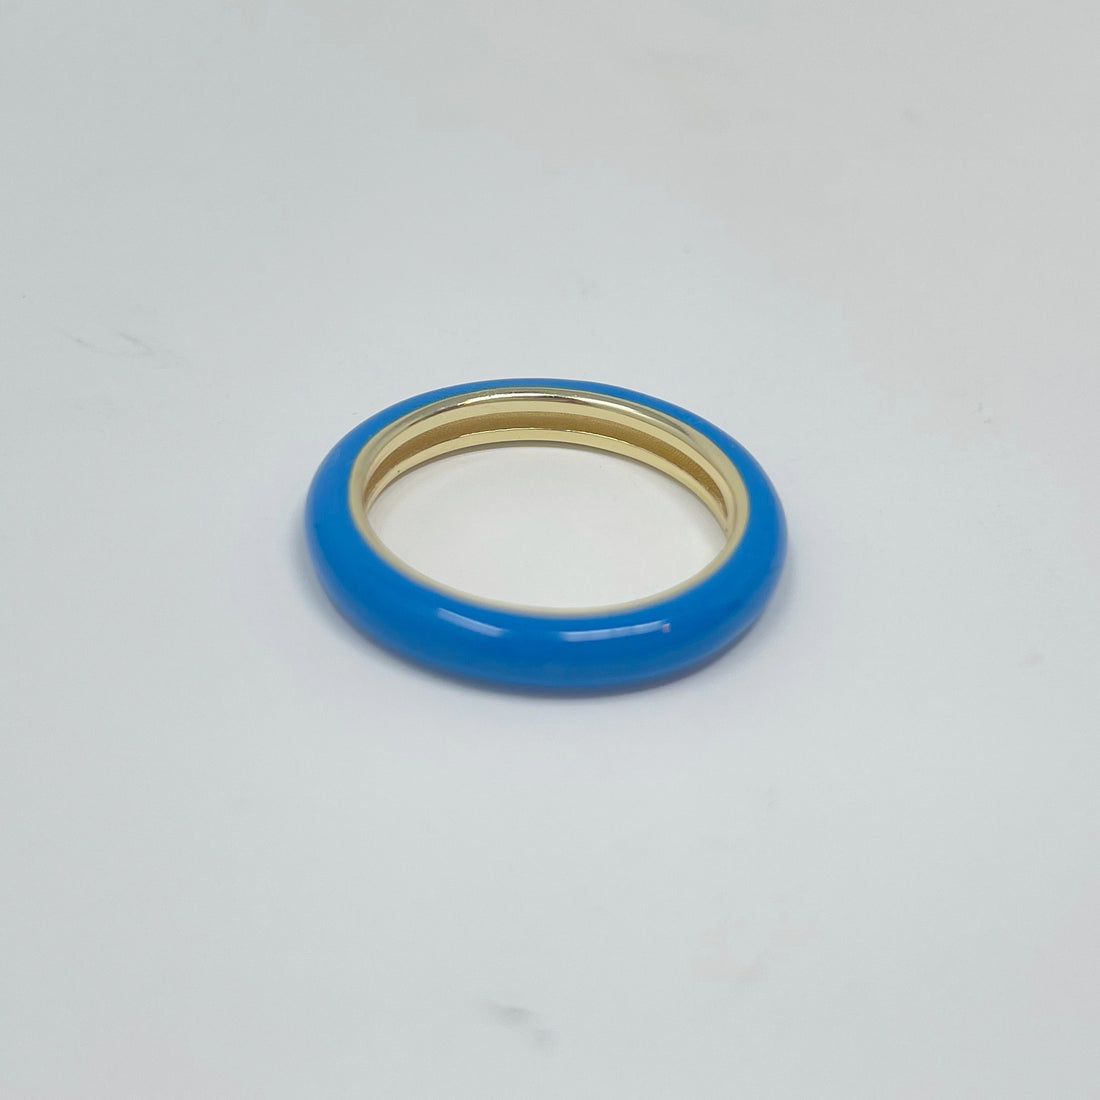 Enamel Ring in Cobalt Blue